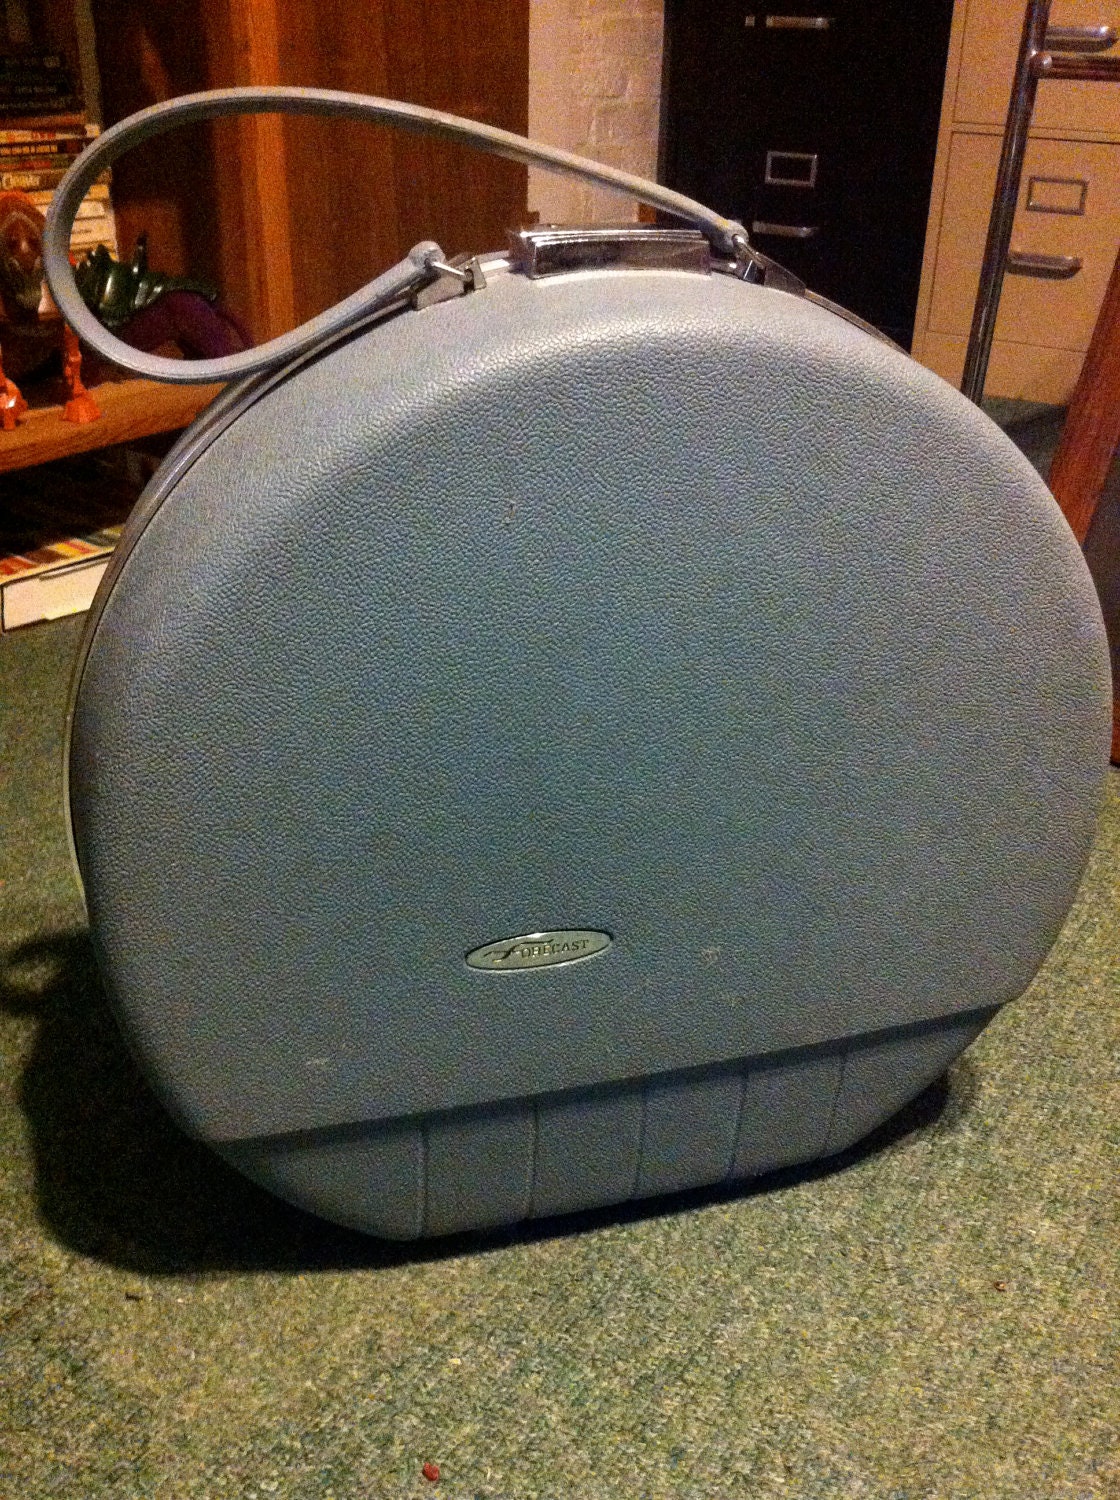 Circular Suitcase